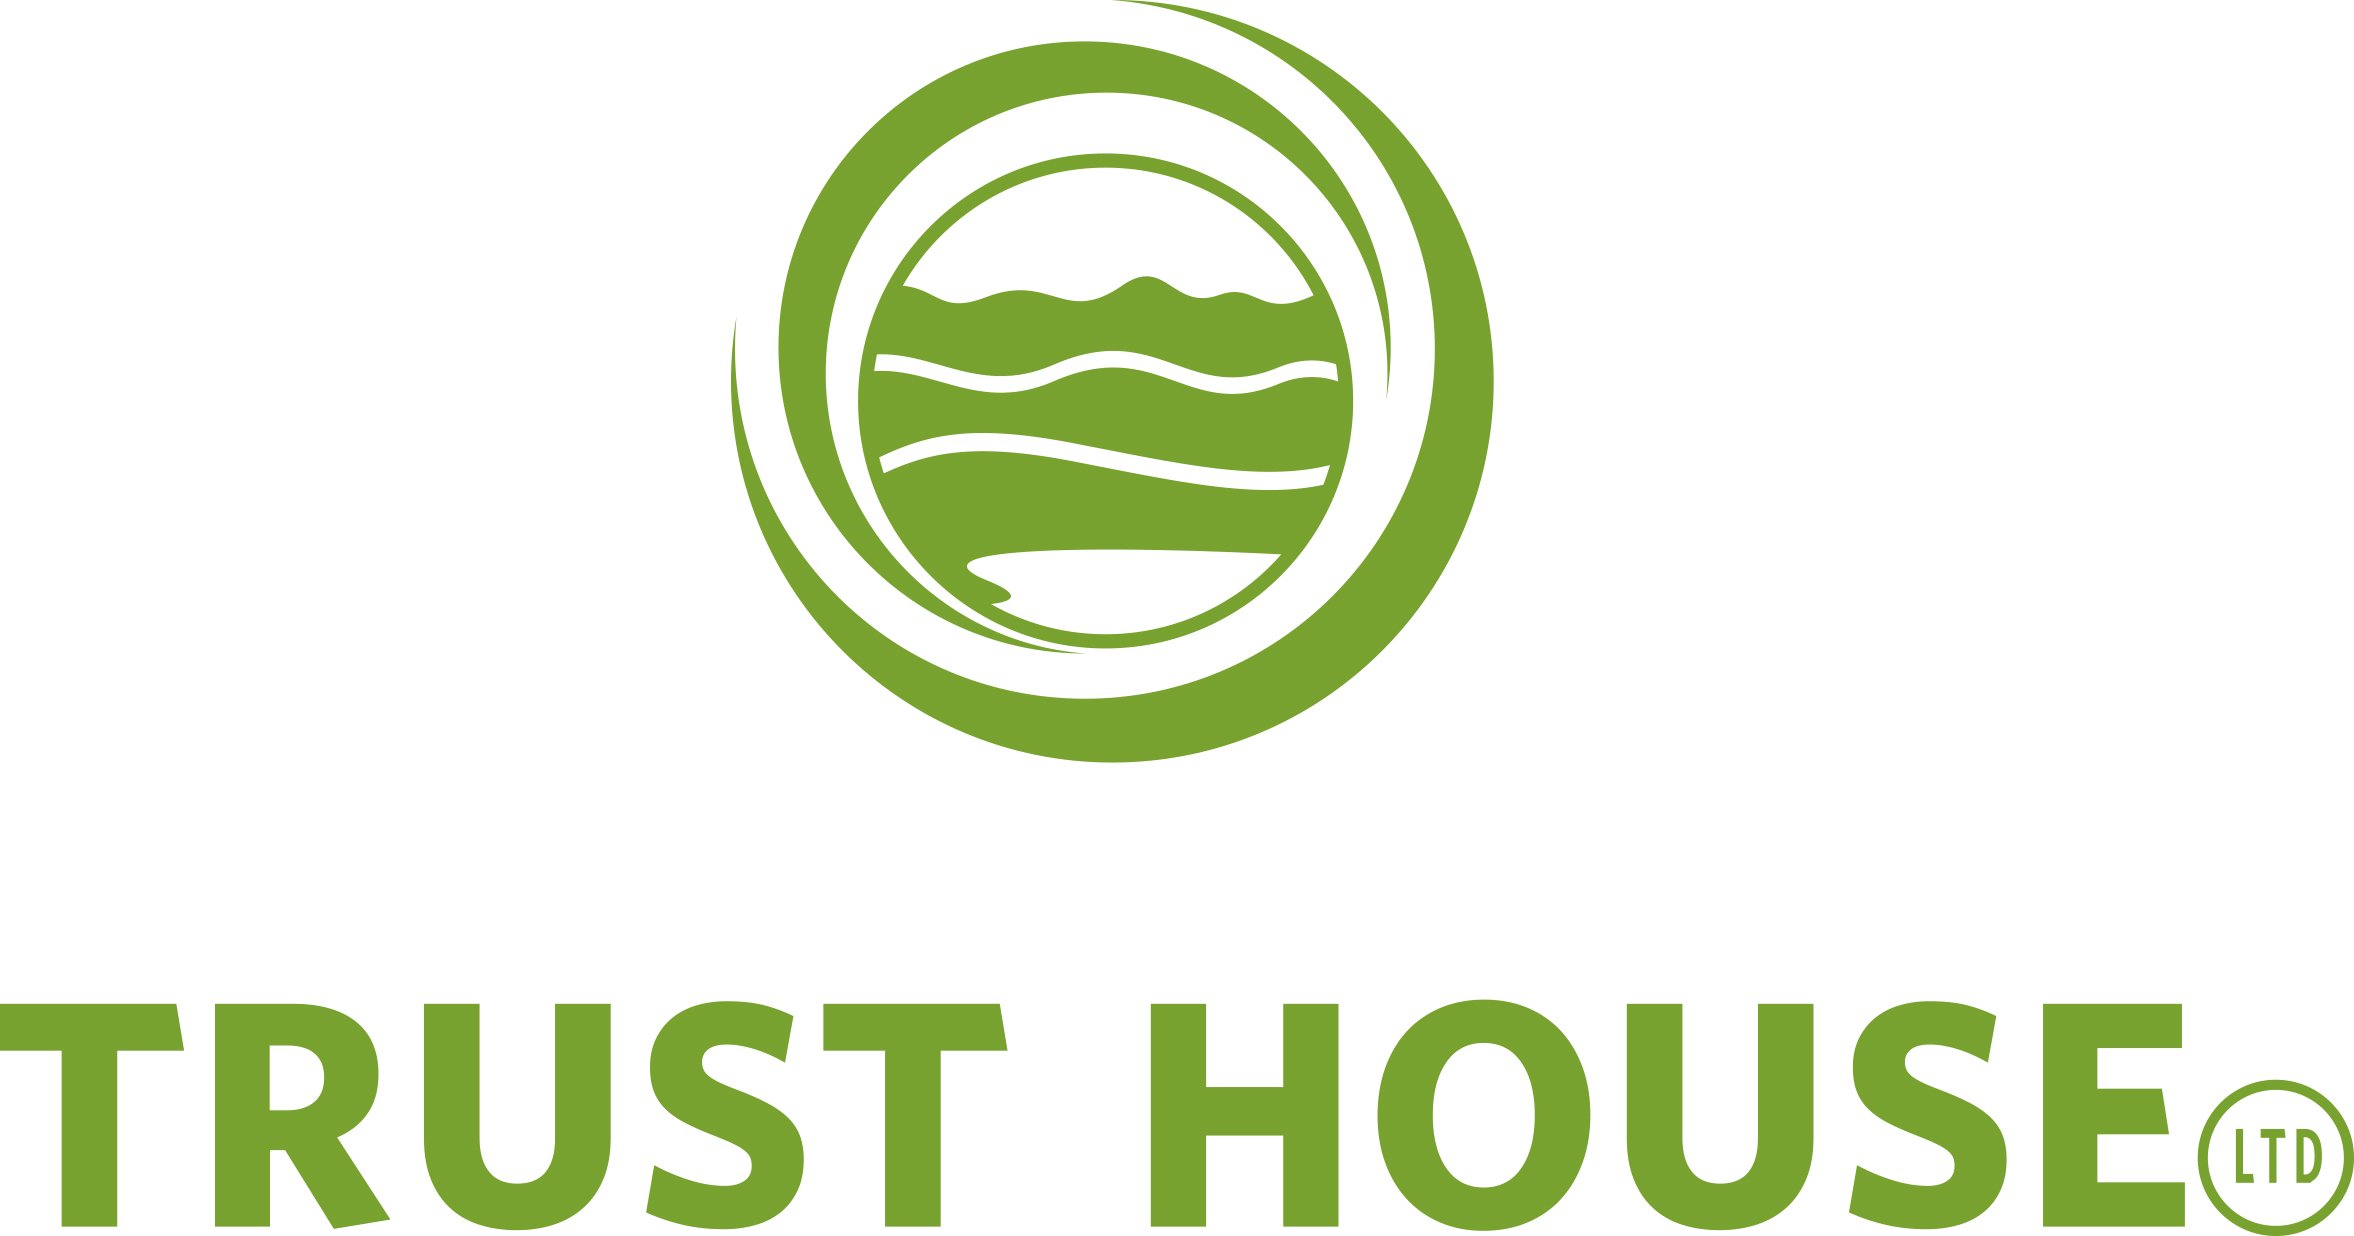 Trust House Limited Logo.jpg